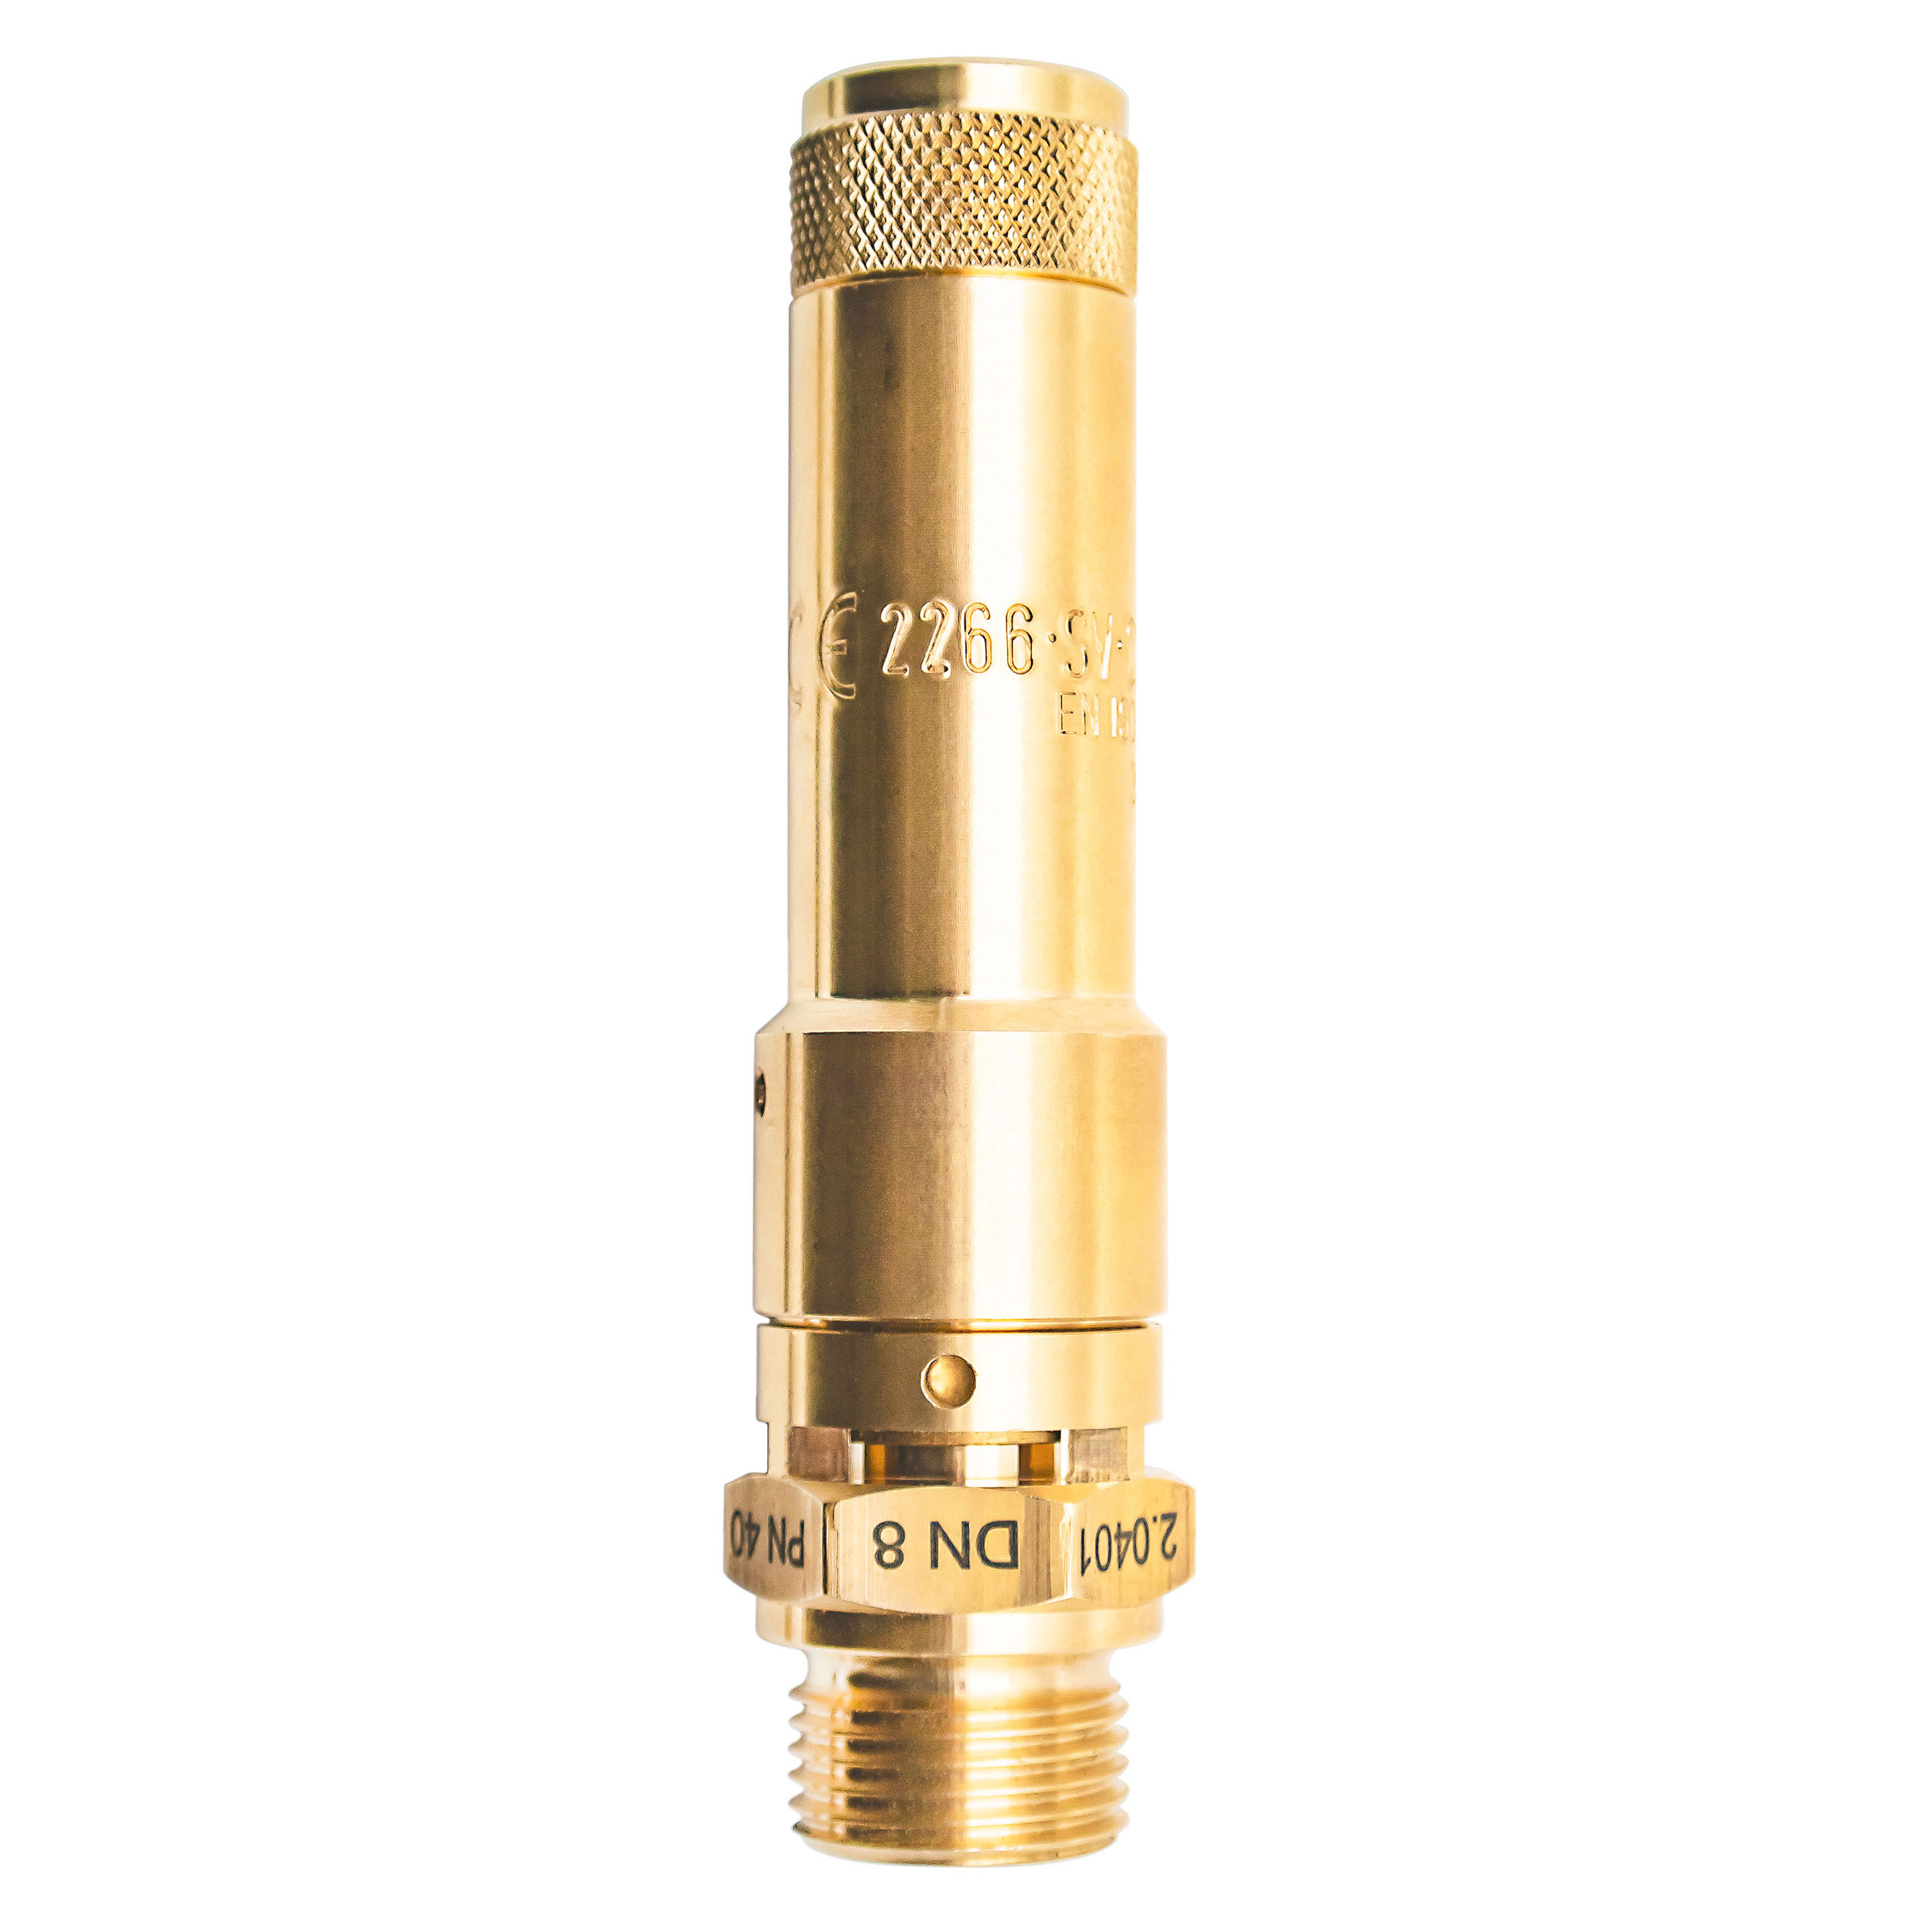 Savety valve component tested DN 8, G¼, set pressure: 39.4 bar (571,3 psi)